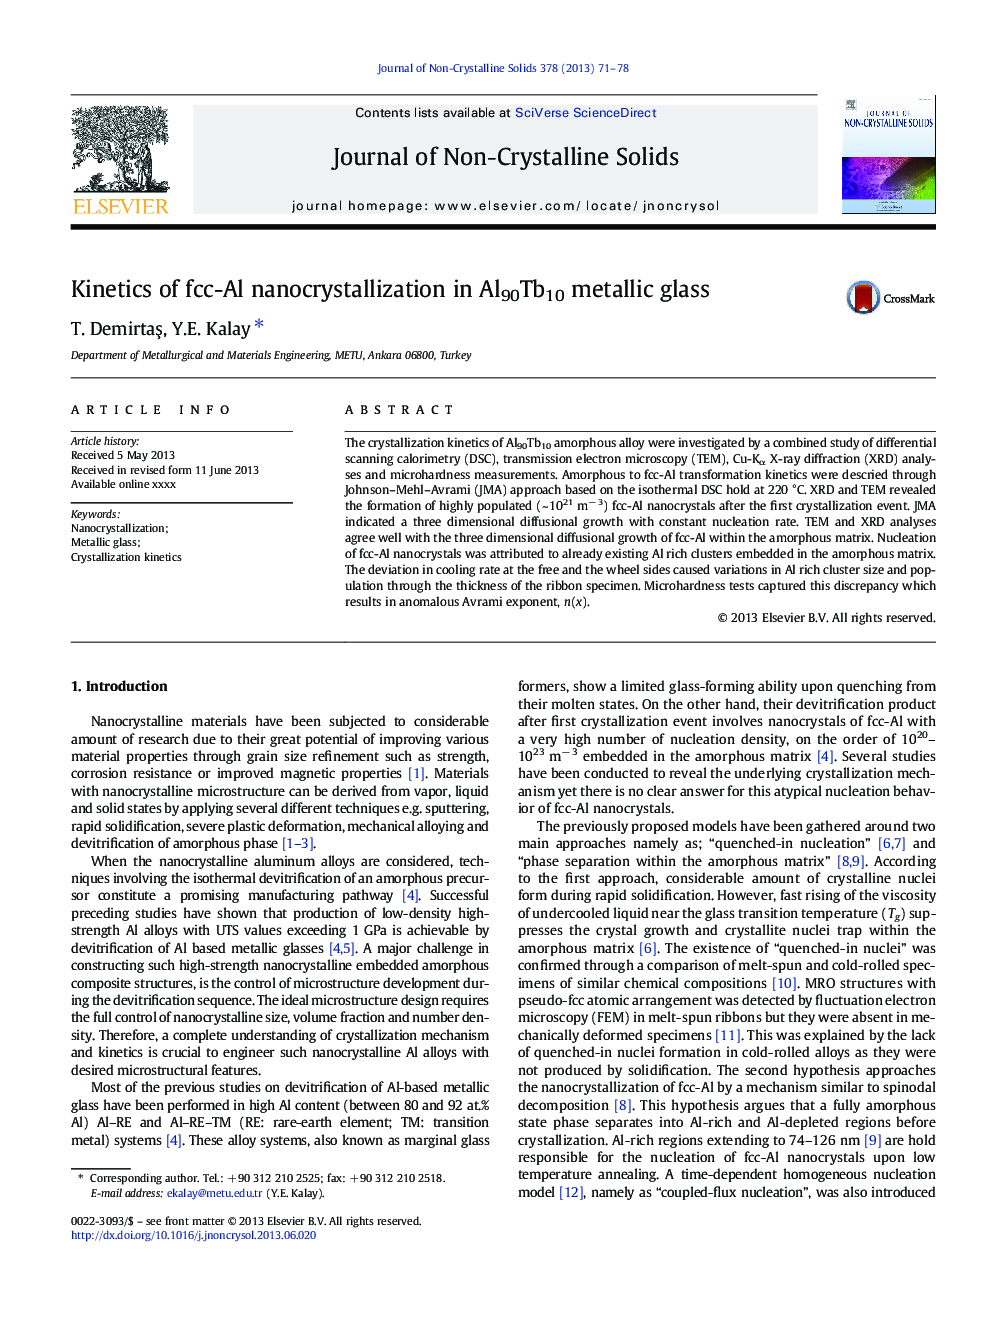 Kinetics of fcc-Al nanocrystallization in Al90Tb10 metallic glass